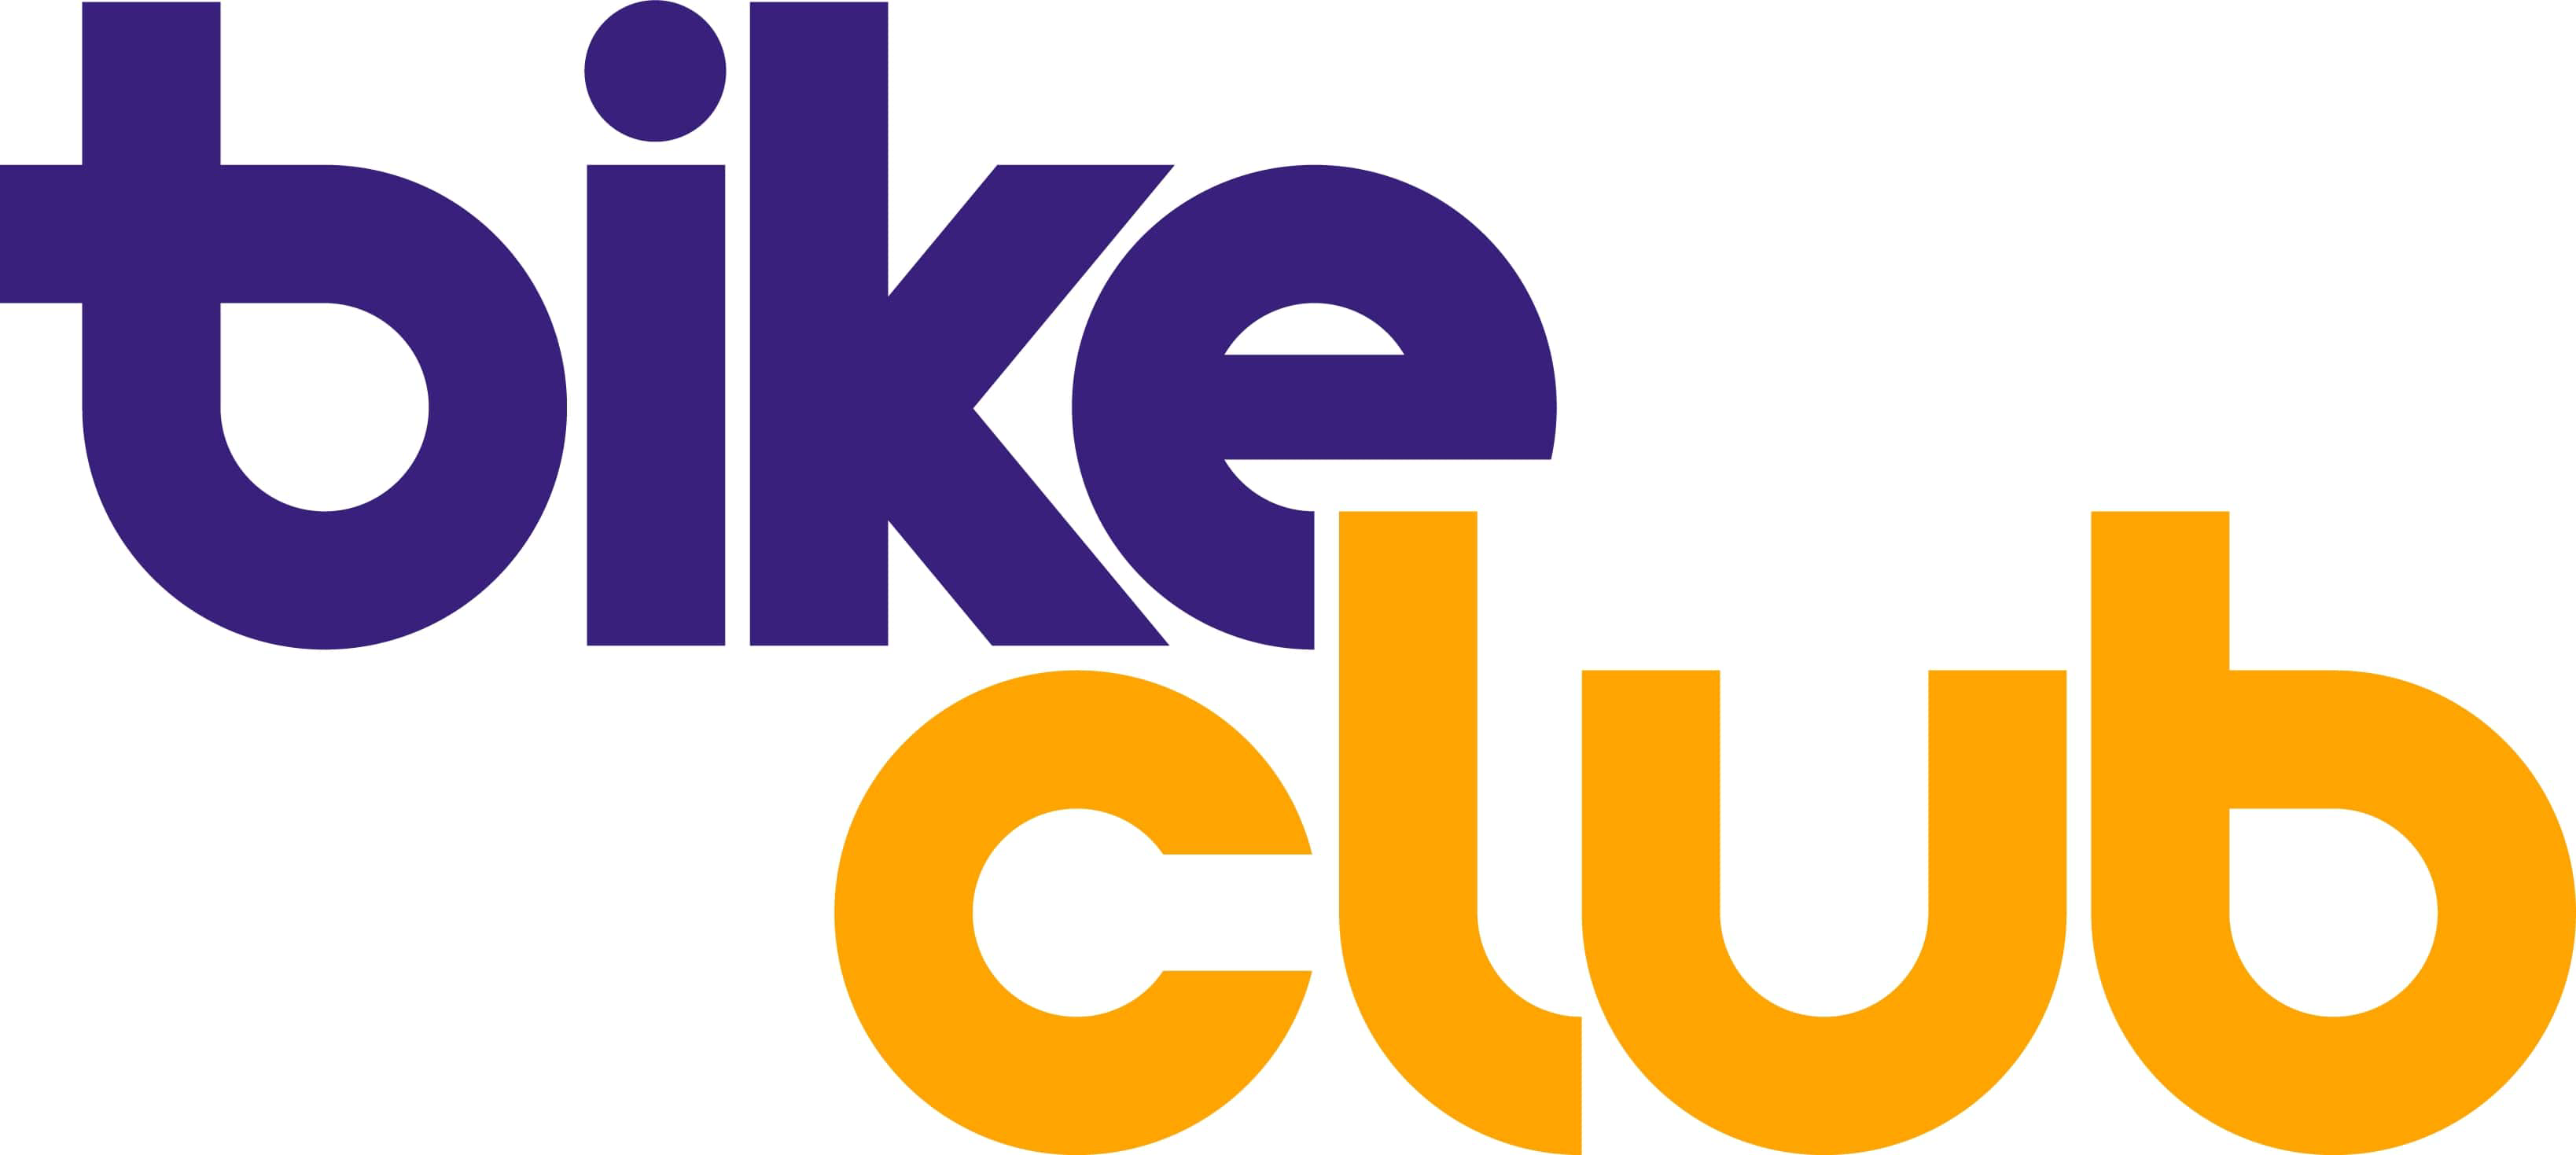 Bike Club Coupons & Promo Codes